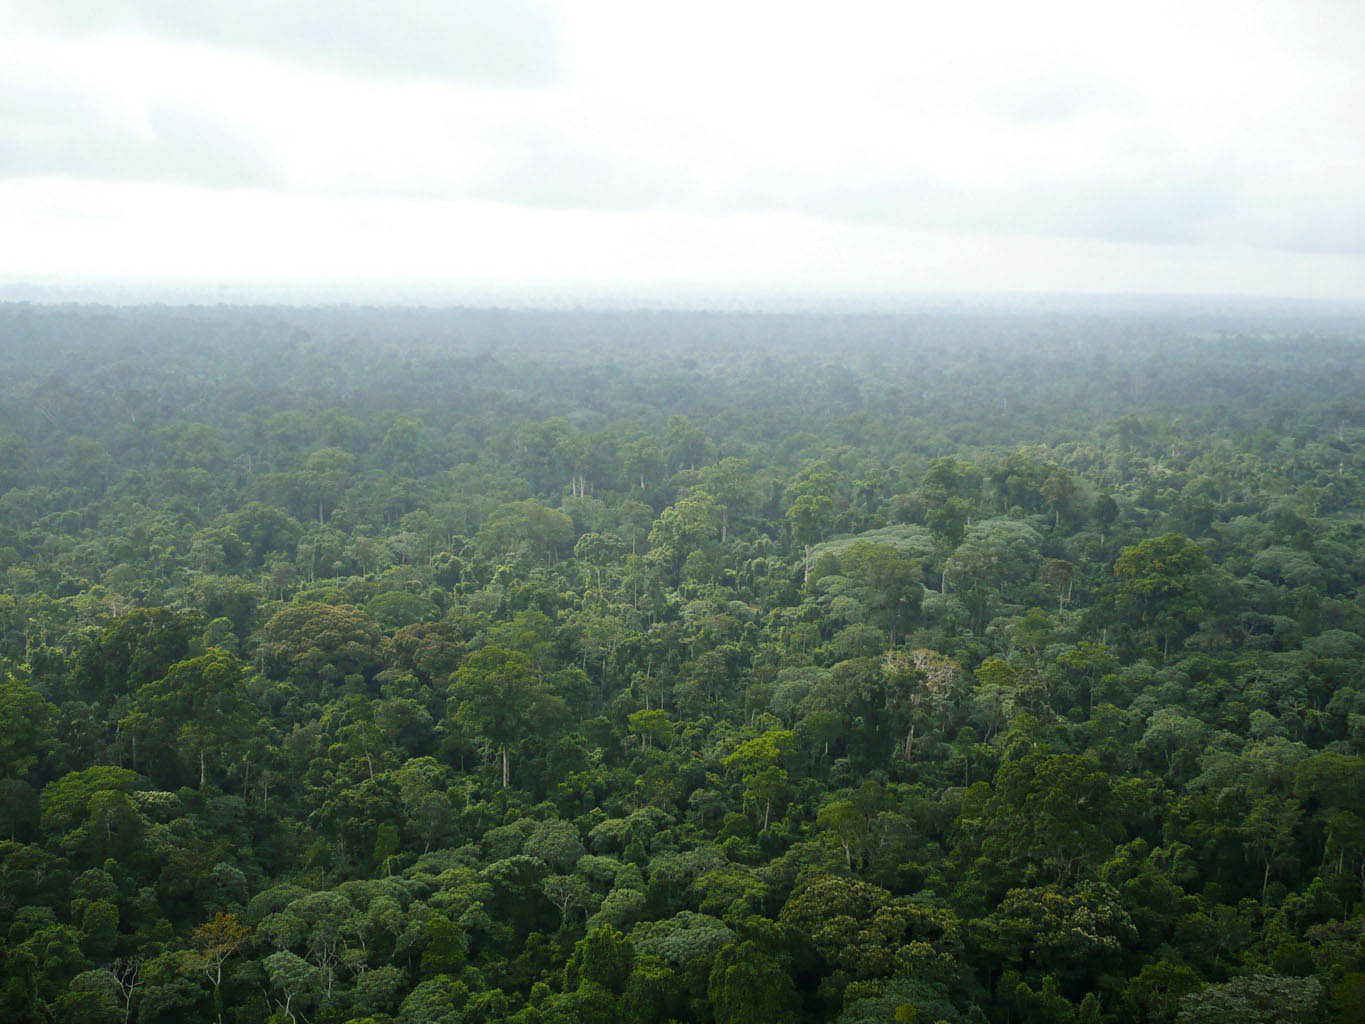 Primary Rain forest - Ogooue Maritime Province Southwestern Gabon